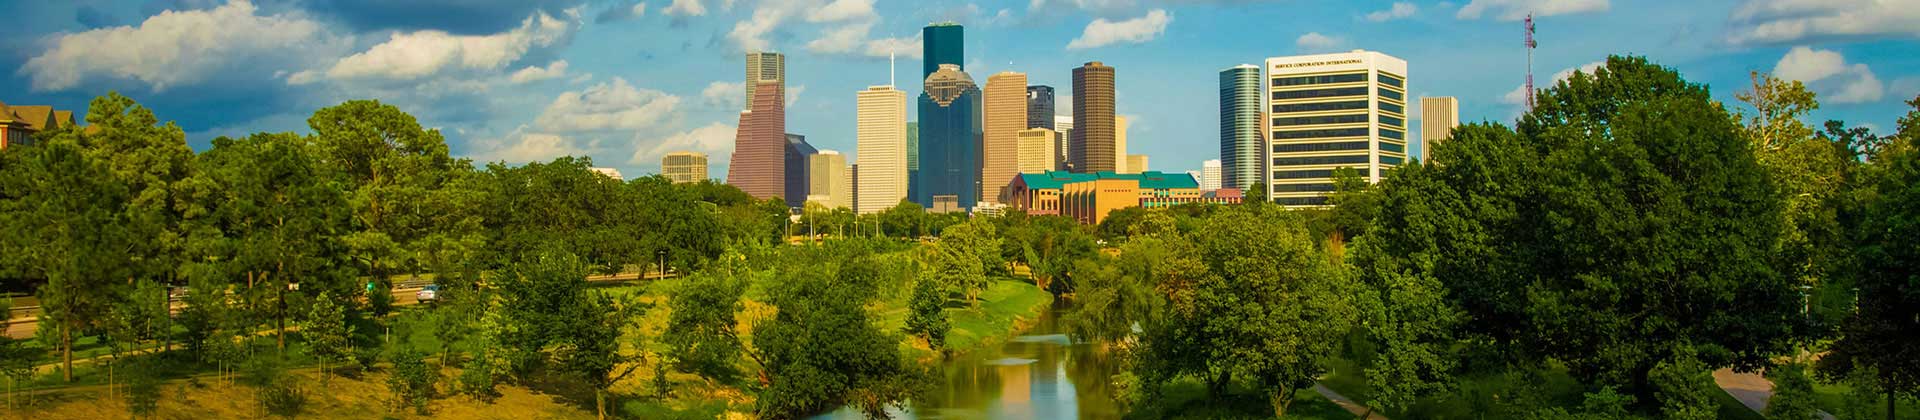 Downtown Houston, Texas, and Surrounding Greenery